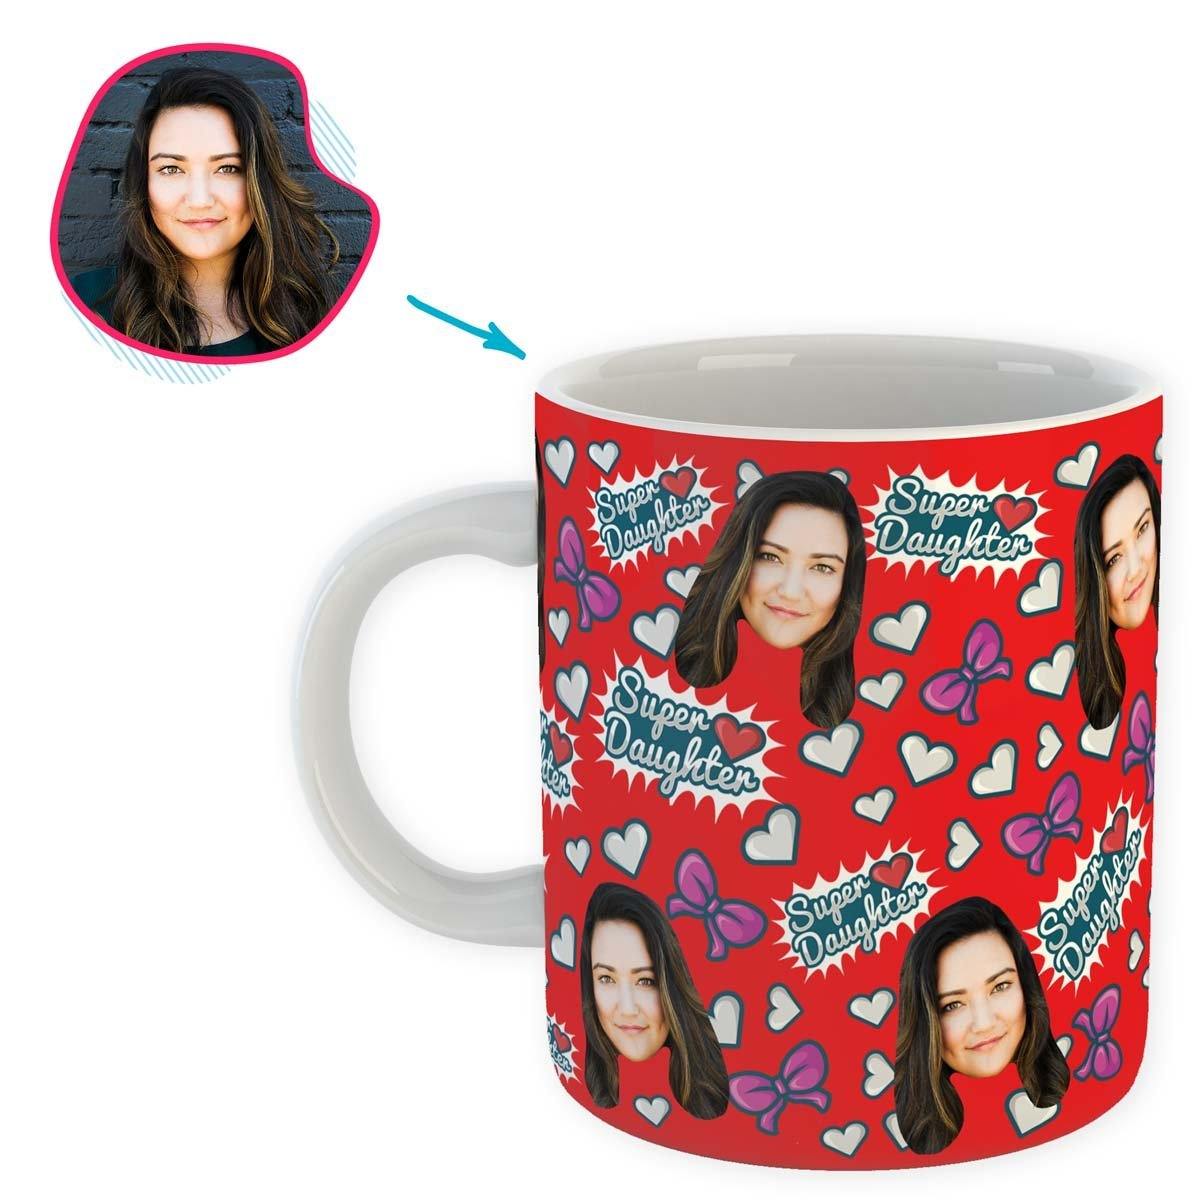 Super Daughter Personalized Mug